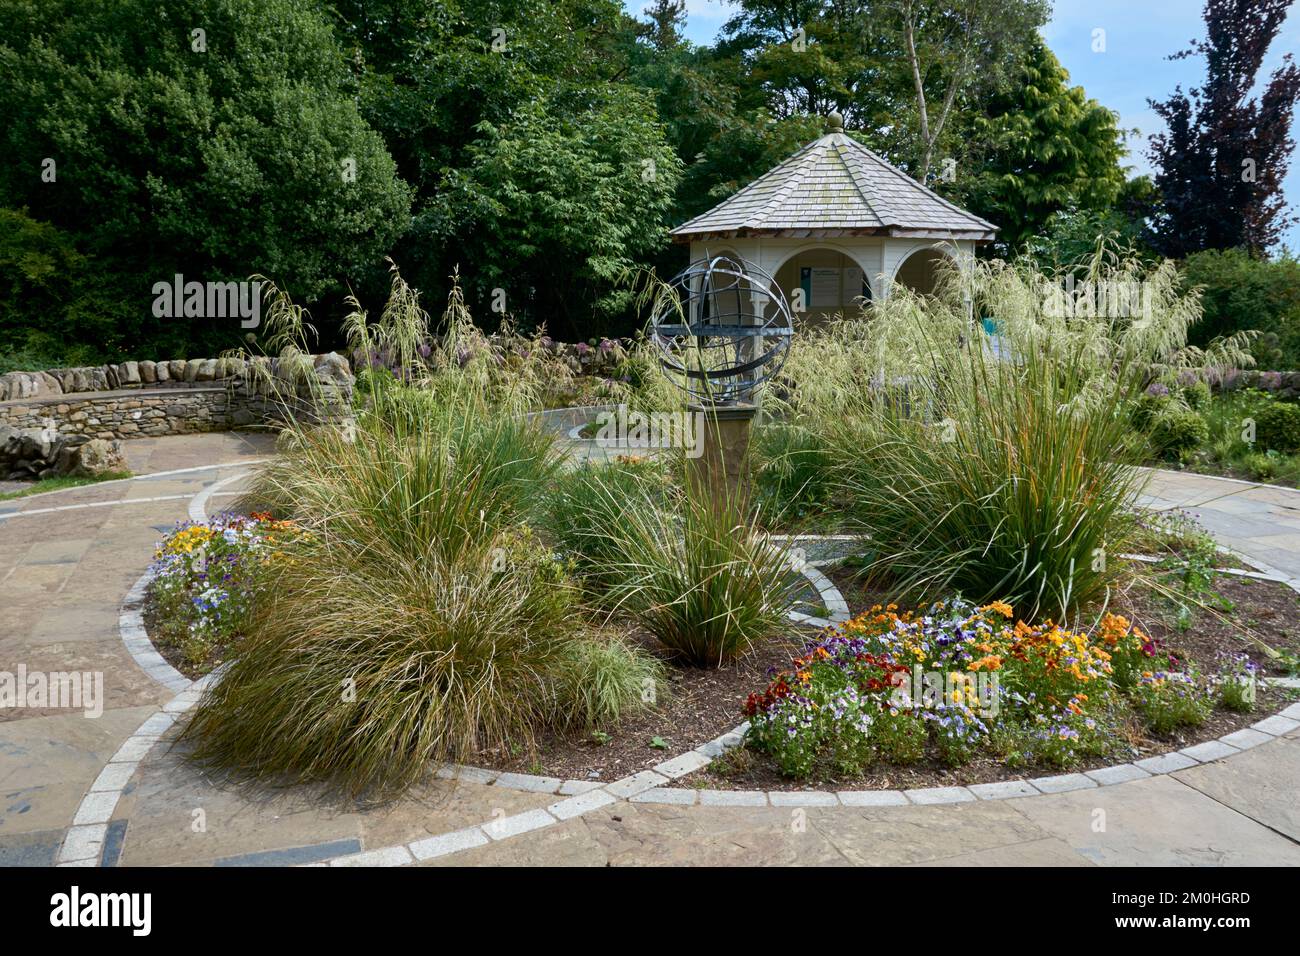 The Garden of Contemplation at Threave Gardens near Castle Douglas, Dumfries and Galloway, Scotland. Stock Photo